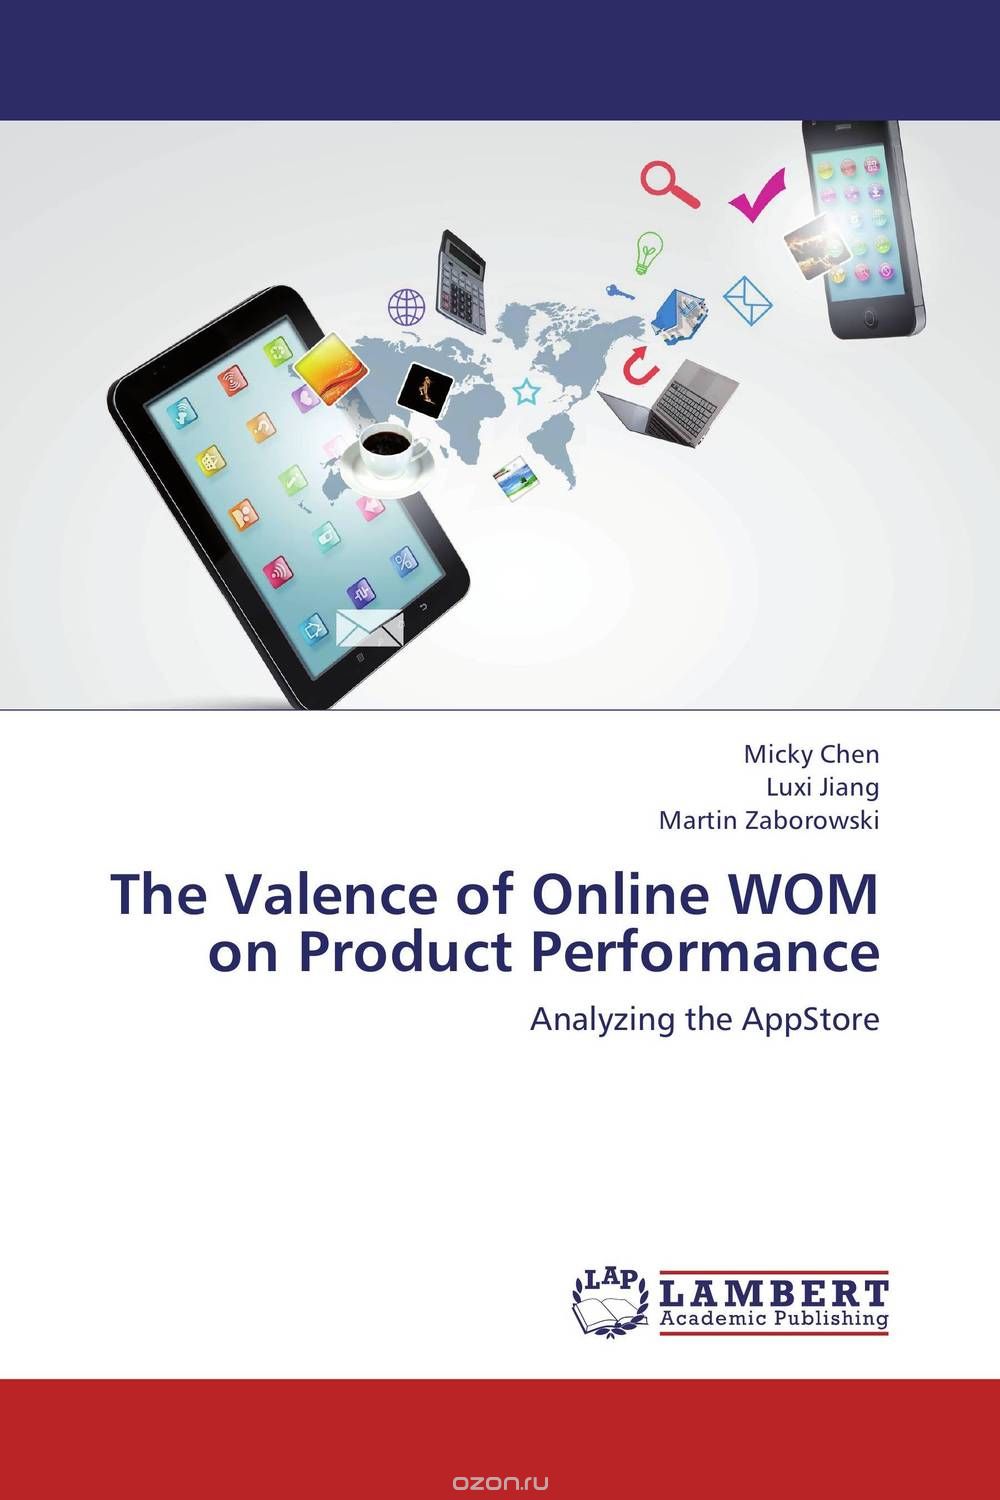 Скачать книгу "The Valence of Online WOM on Product Performance"